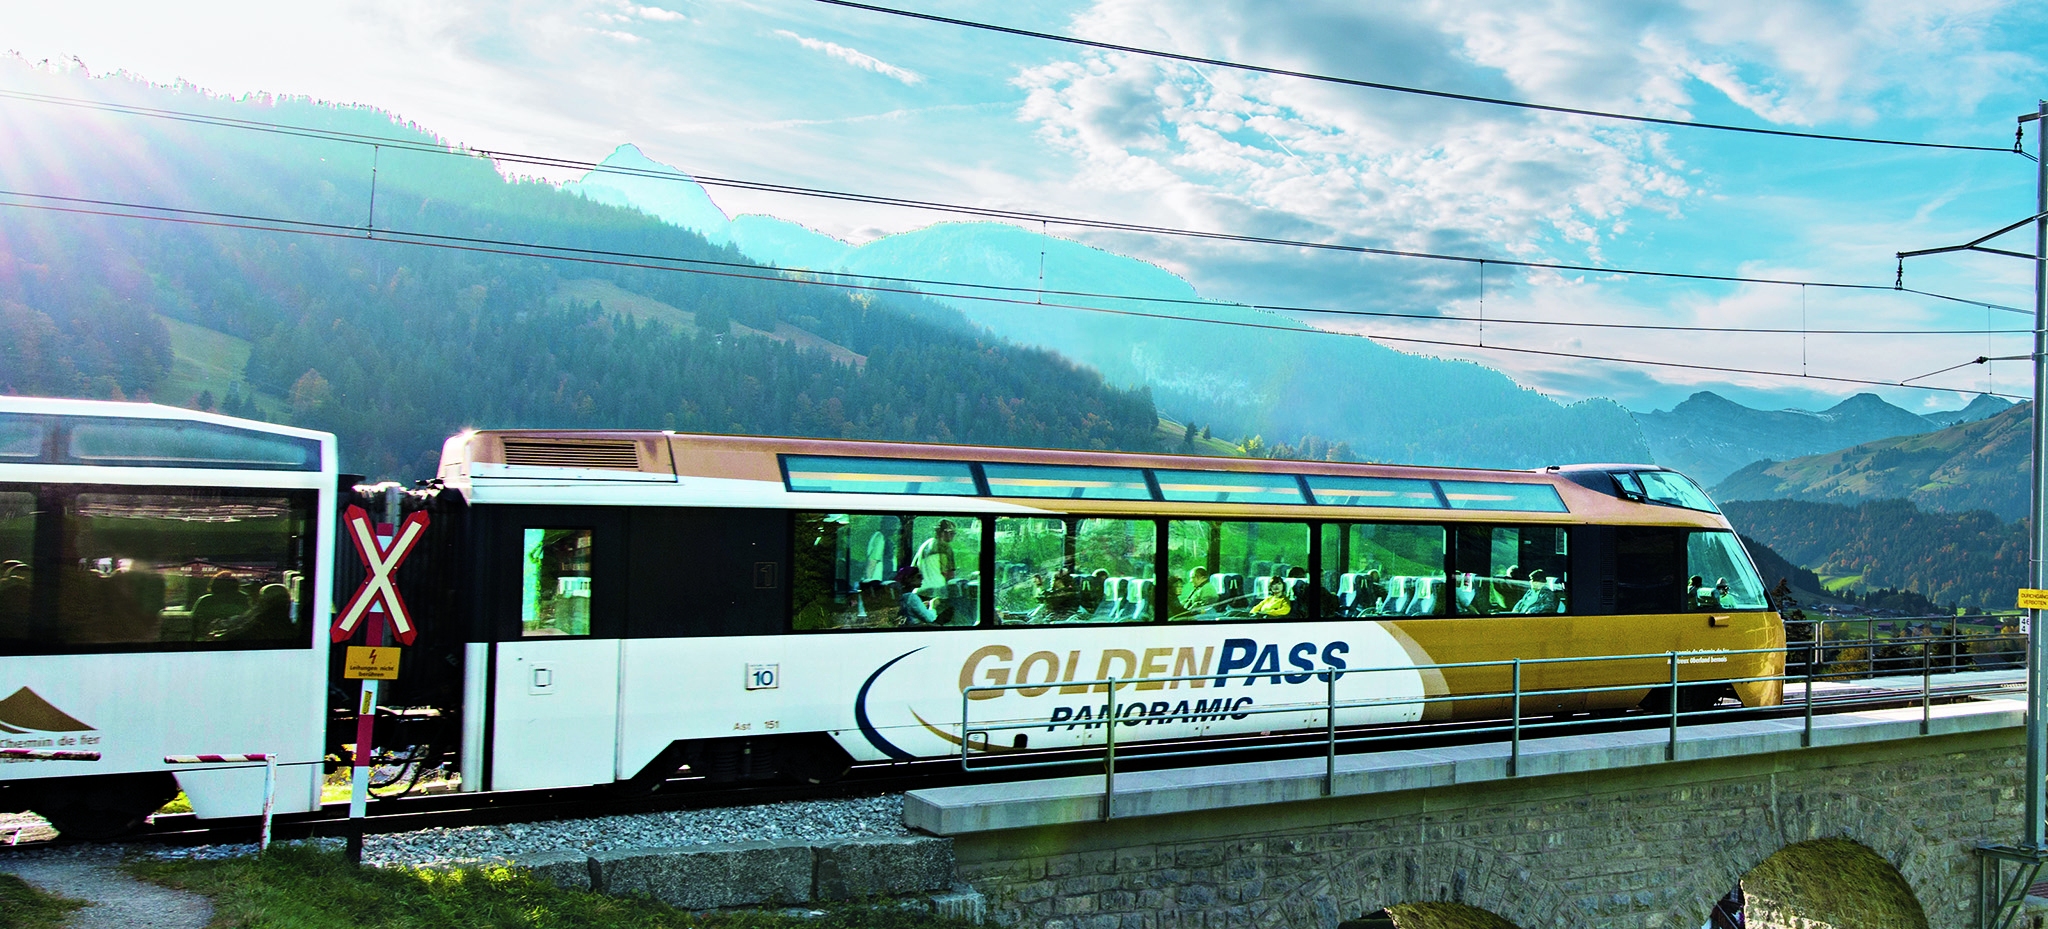 kt_2020_350_Keytours_excursions_Swisstours_gruyeres_goldenpass_panoramic_train1_2048_10